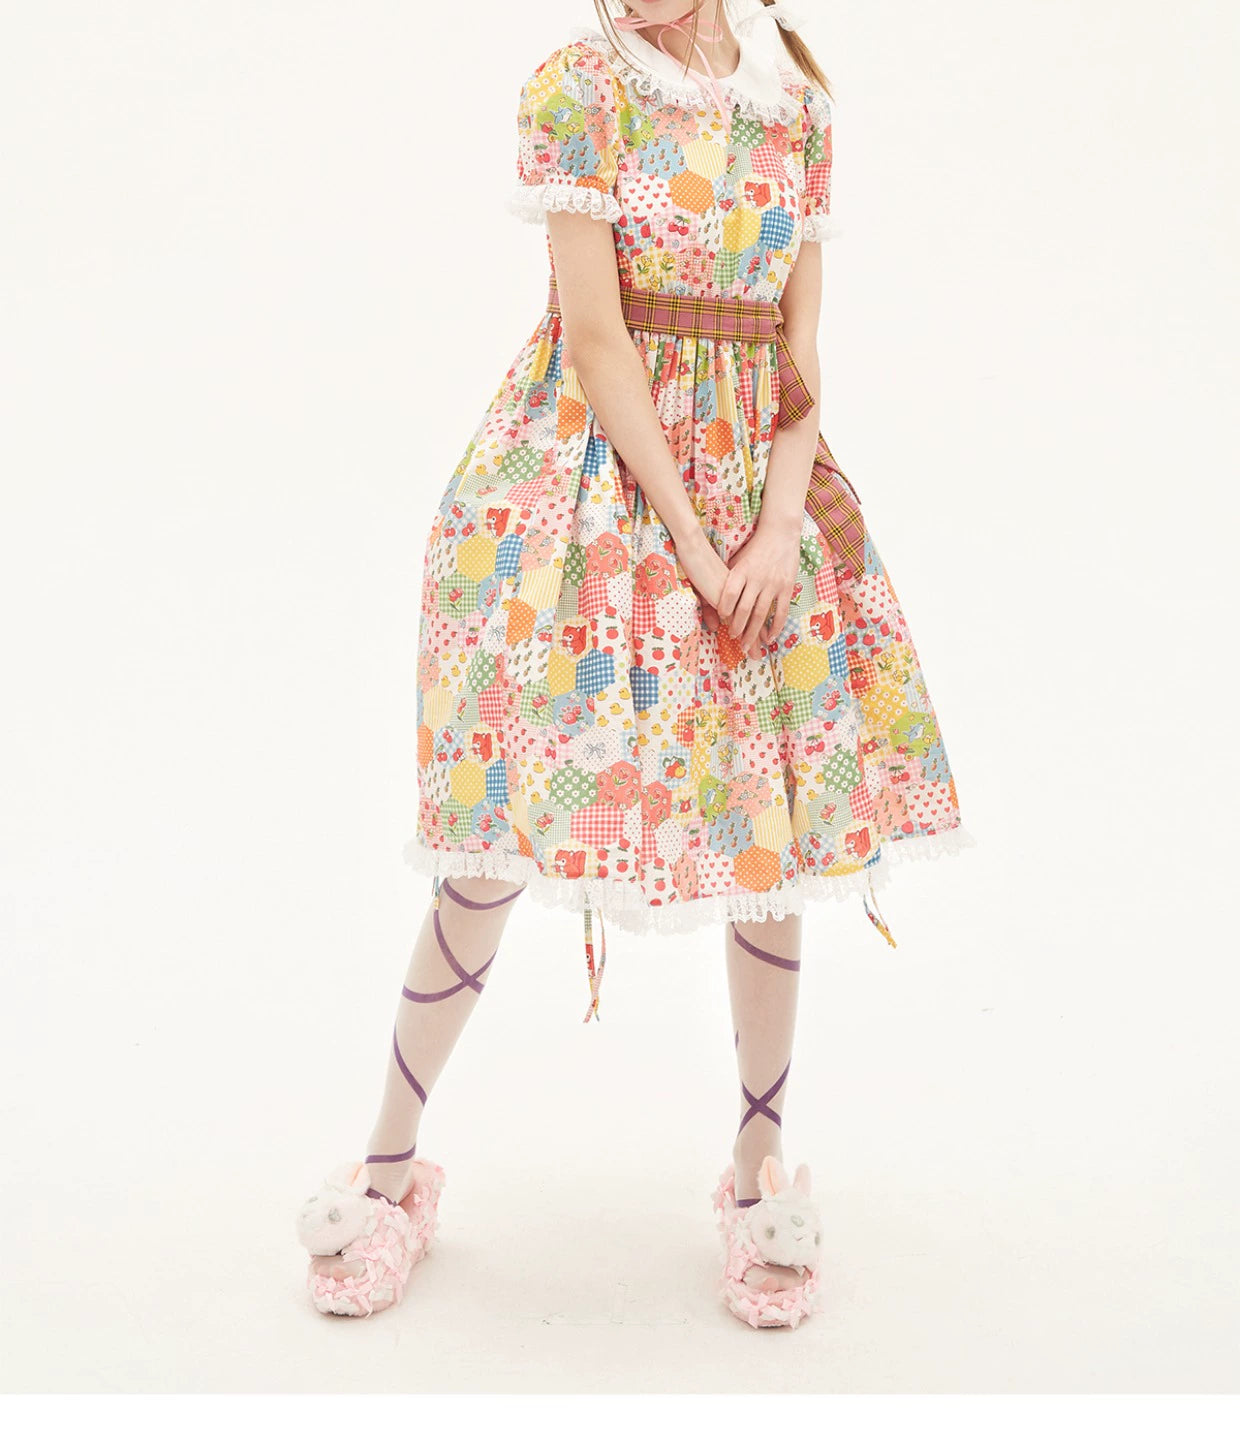 Sweet Lolita Dress Kidcore Floral Dress Drawstring Dress 36156:543116